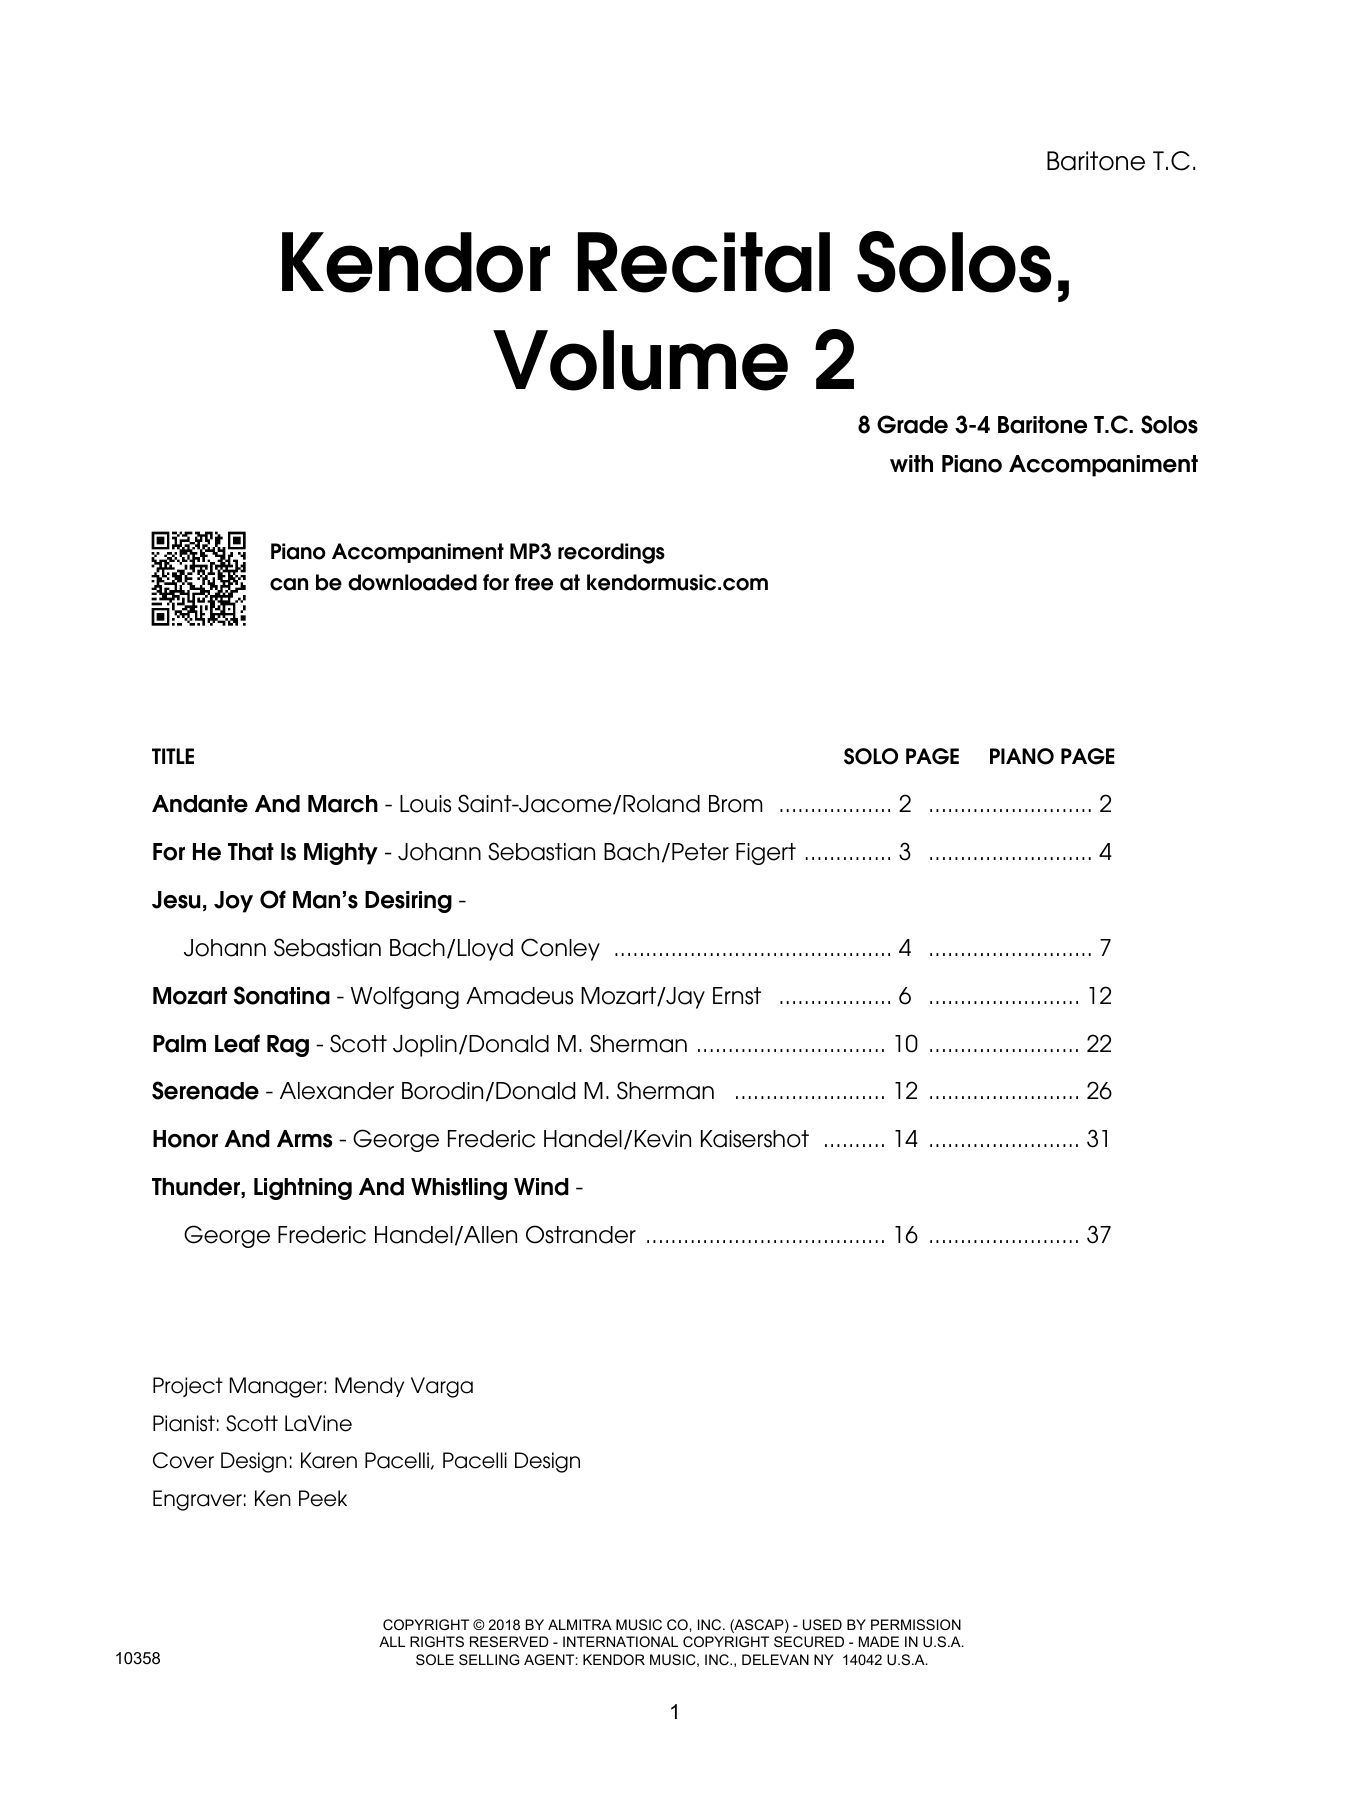 Download Various Kendor Recital Solos, Volume 2 - Barito Sheet Music